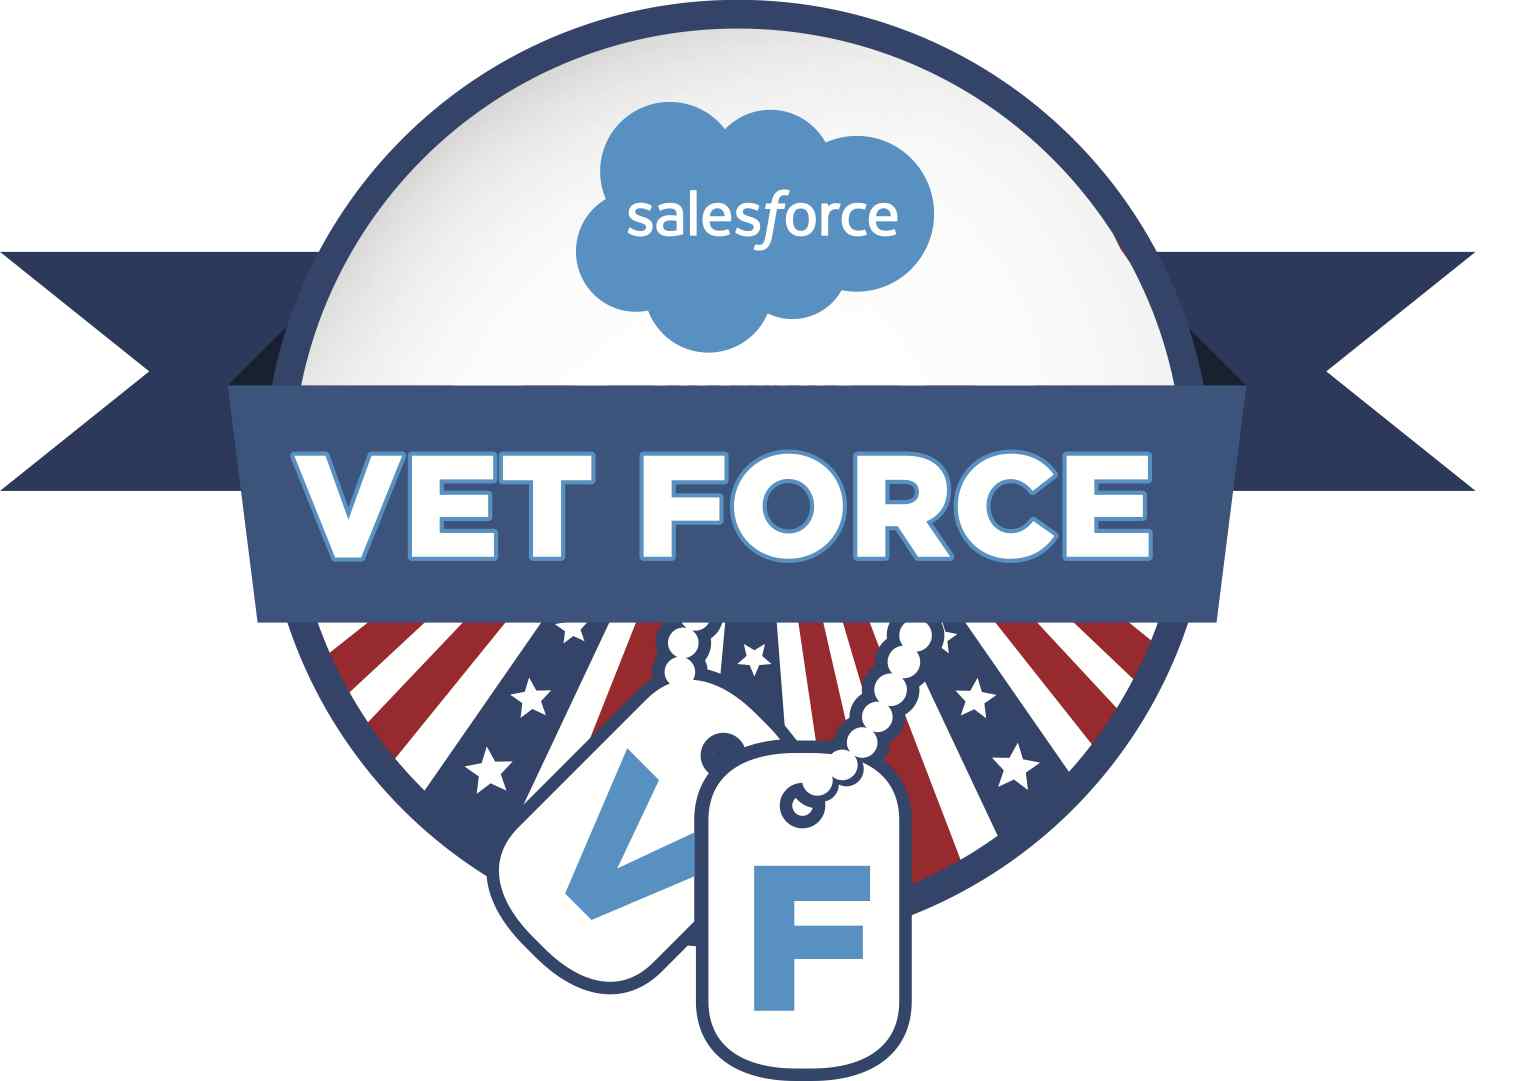 VetForce: Salesforce for Military Veterans